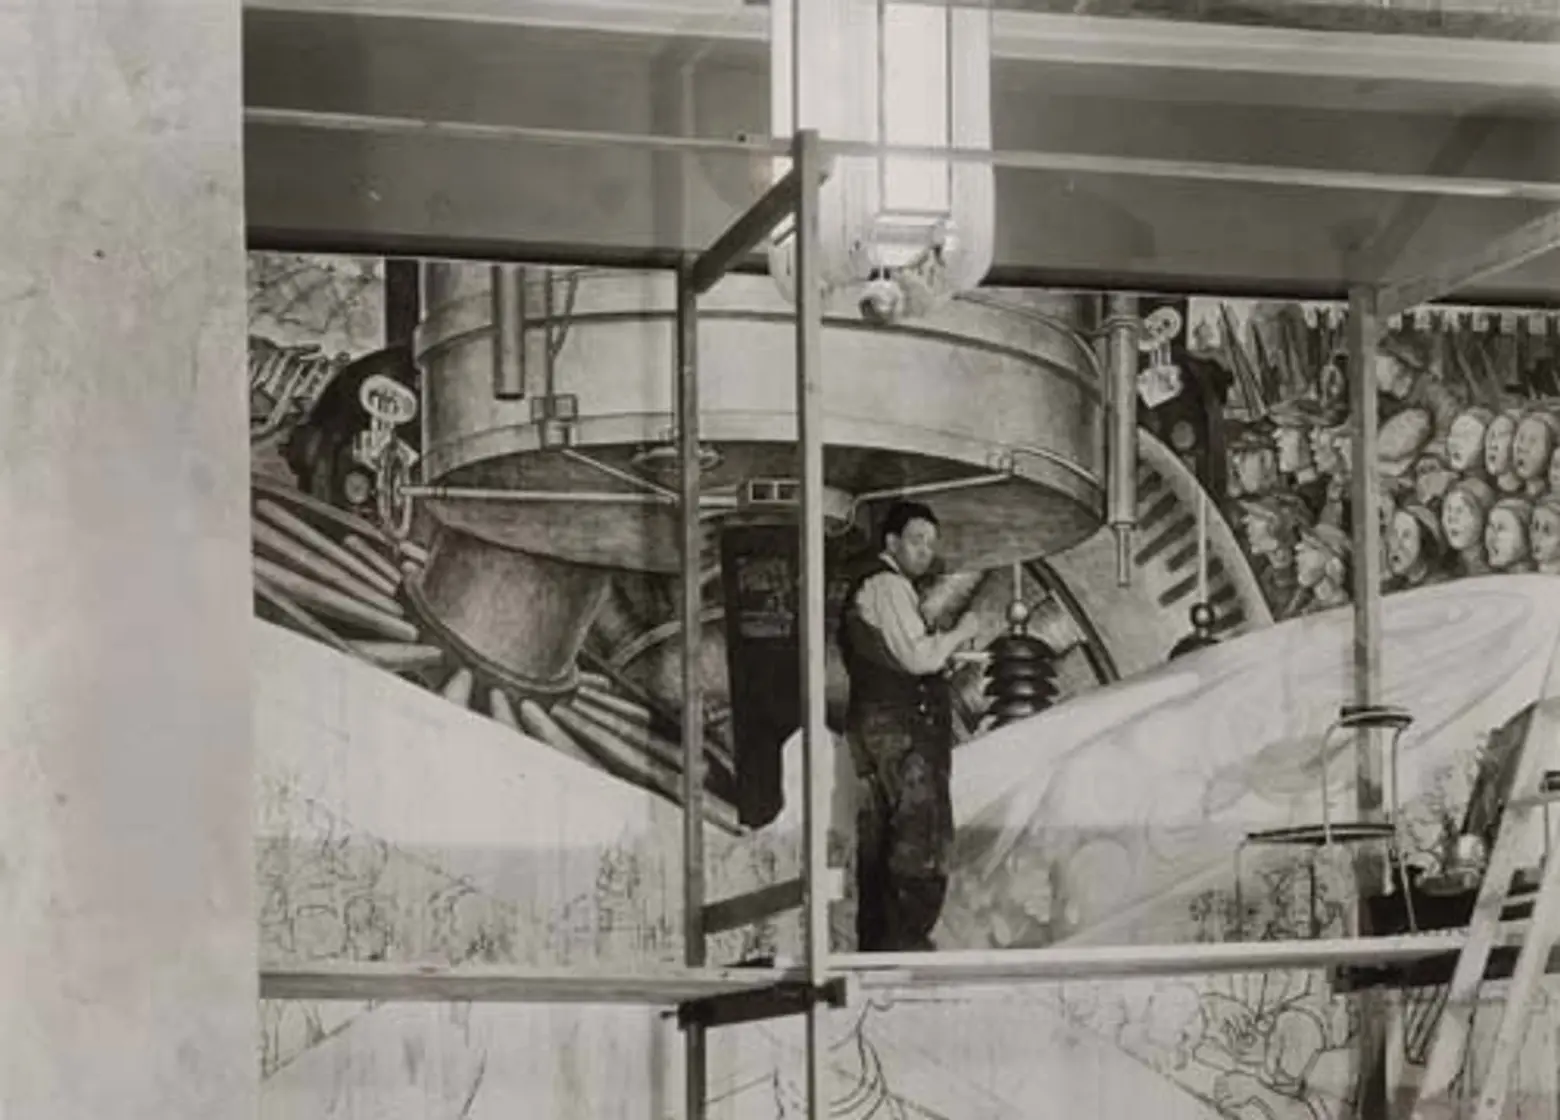 Rivera Diego working on mural in Rockefeller Center in 1933